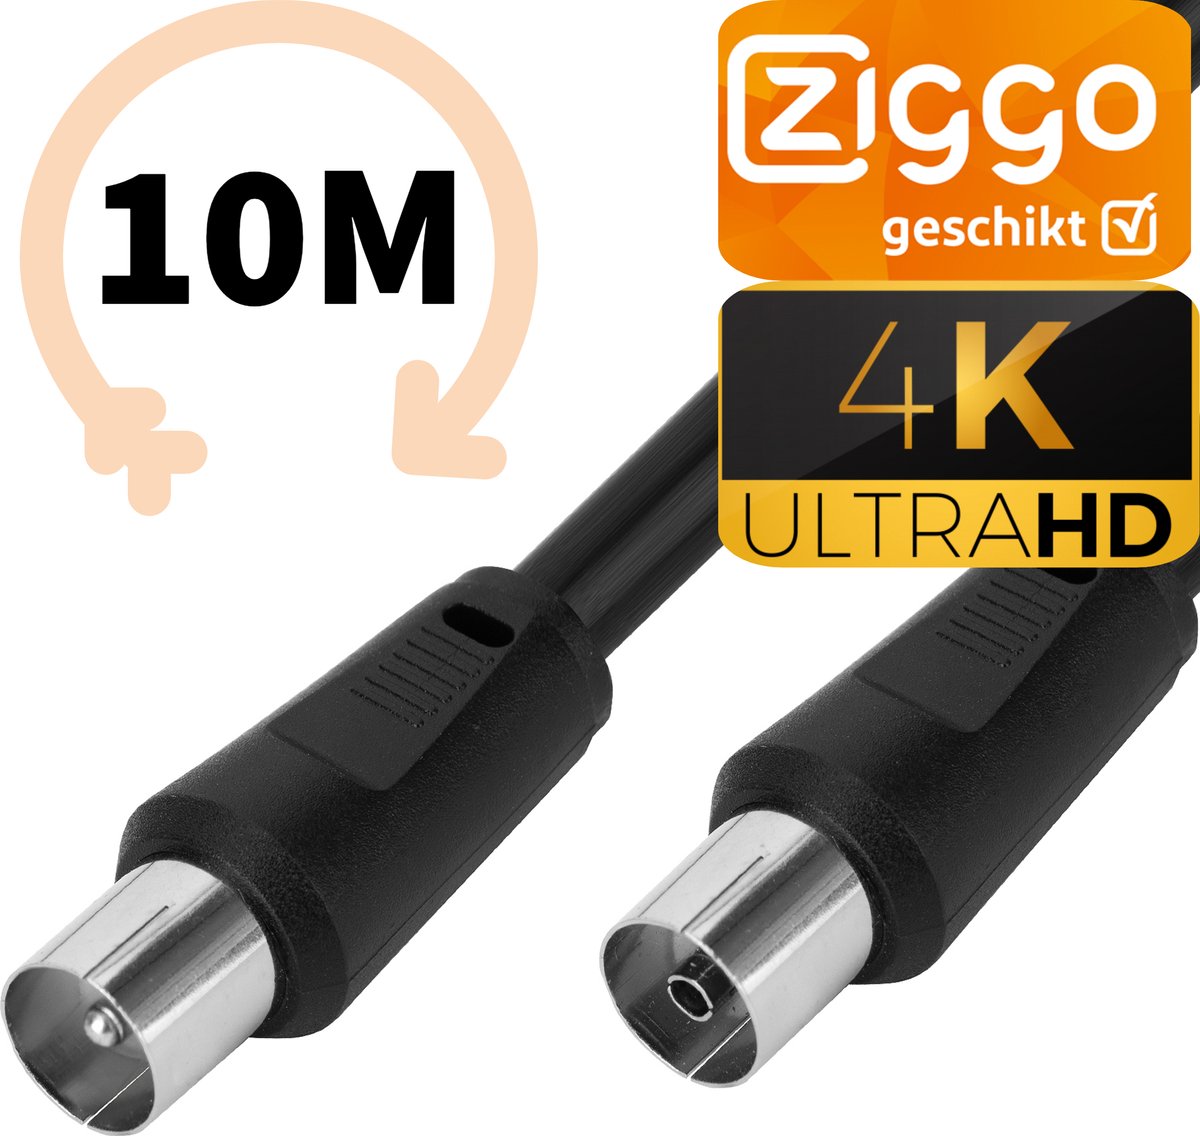 Coax Kabel Ziggo - 4k Ultra HD Coaxkabel